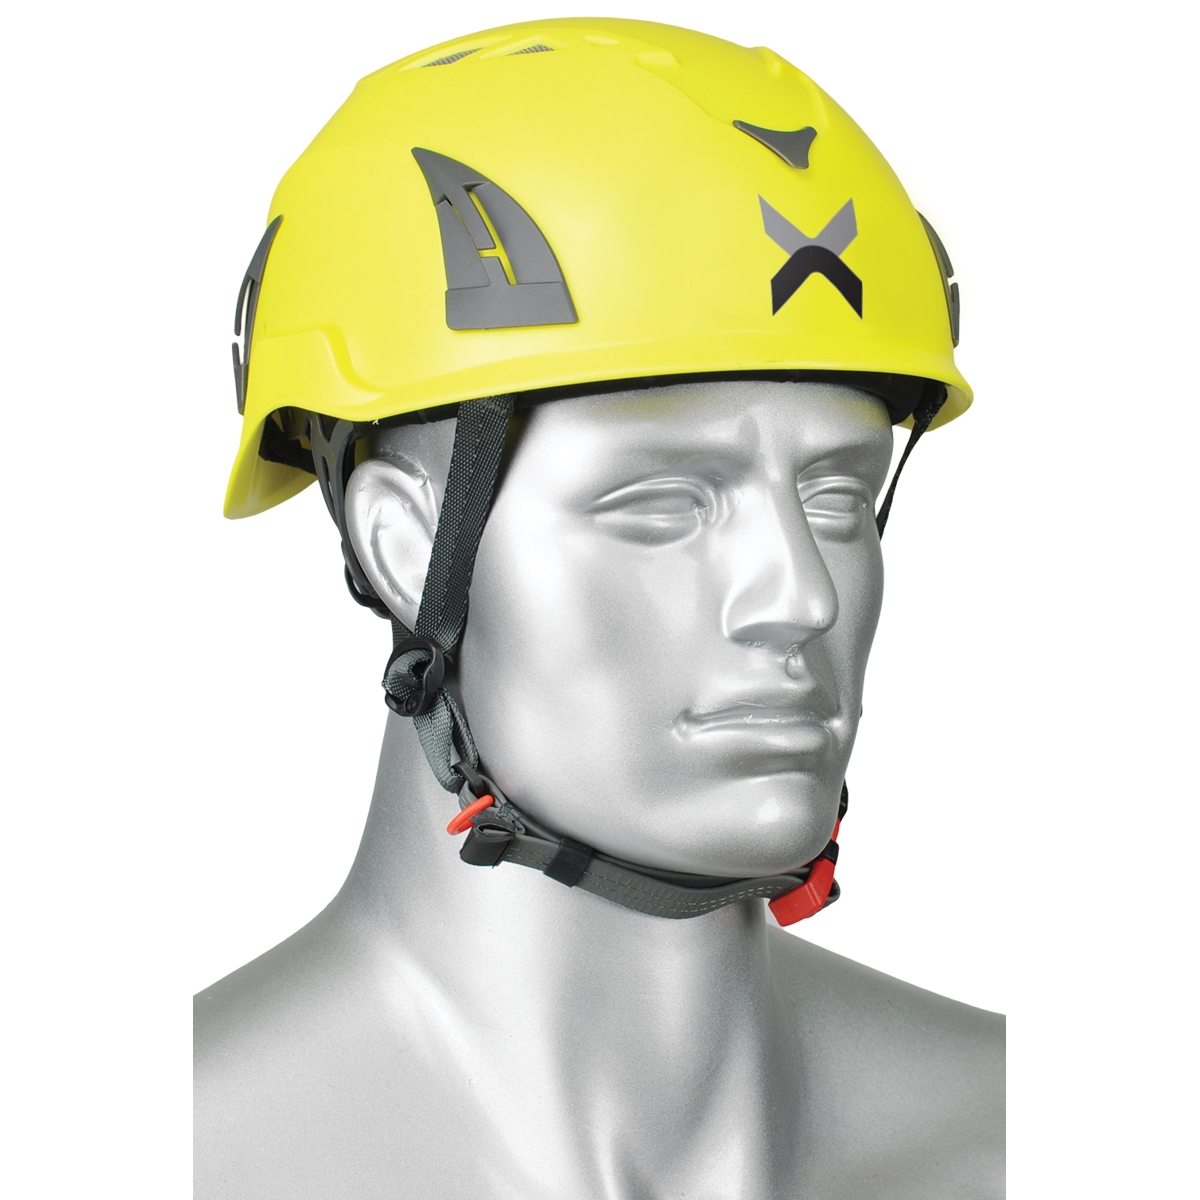 Apex Viko Industrial Safety Helmet APX02